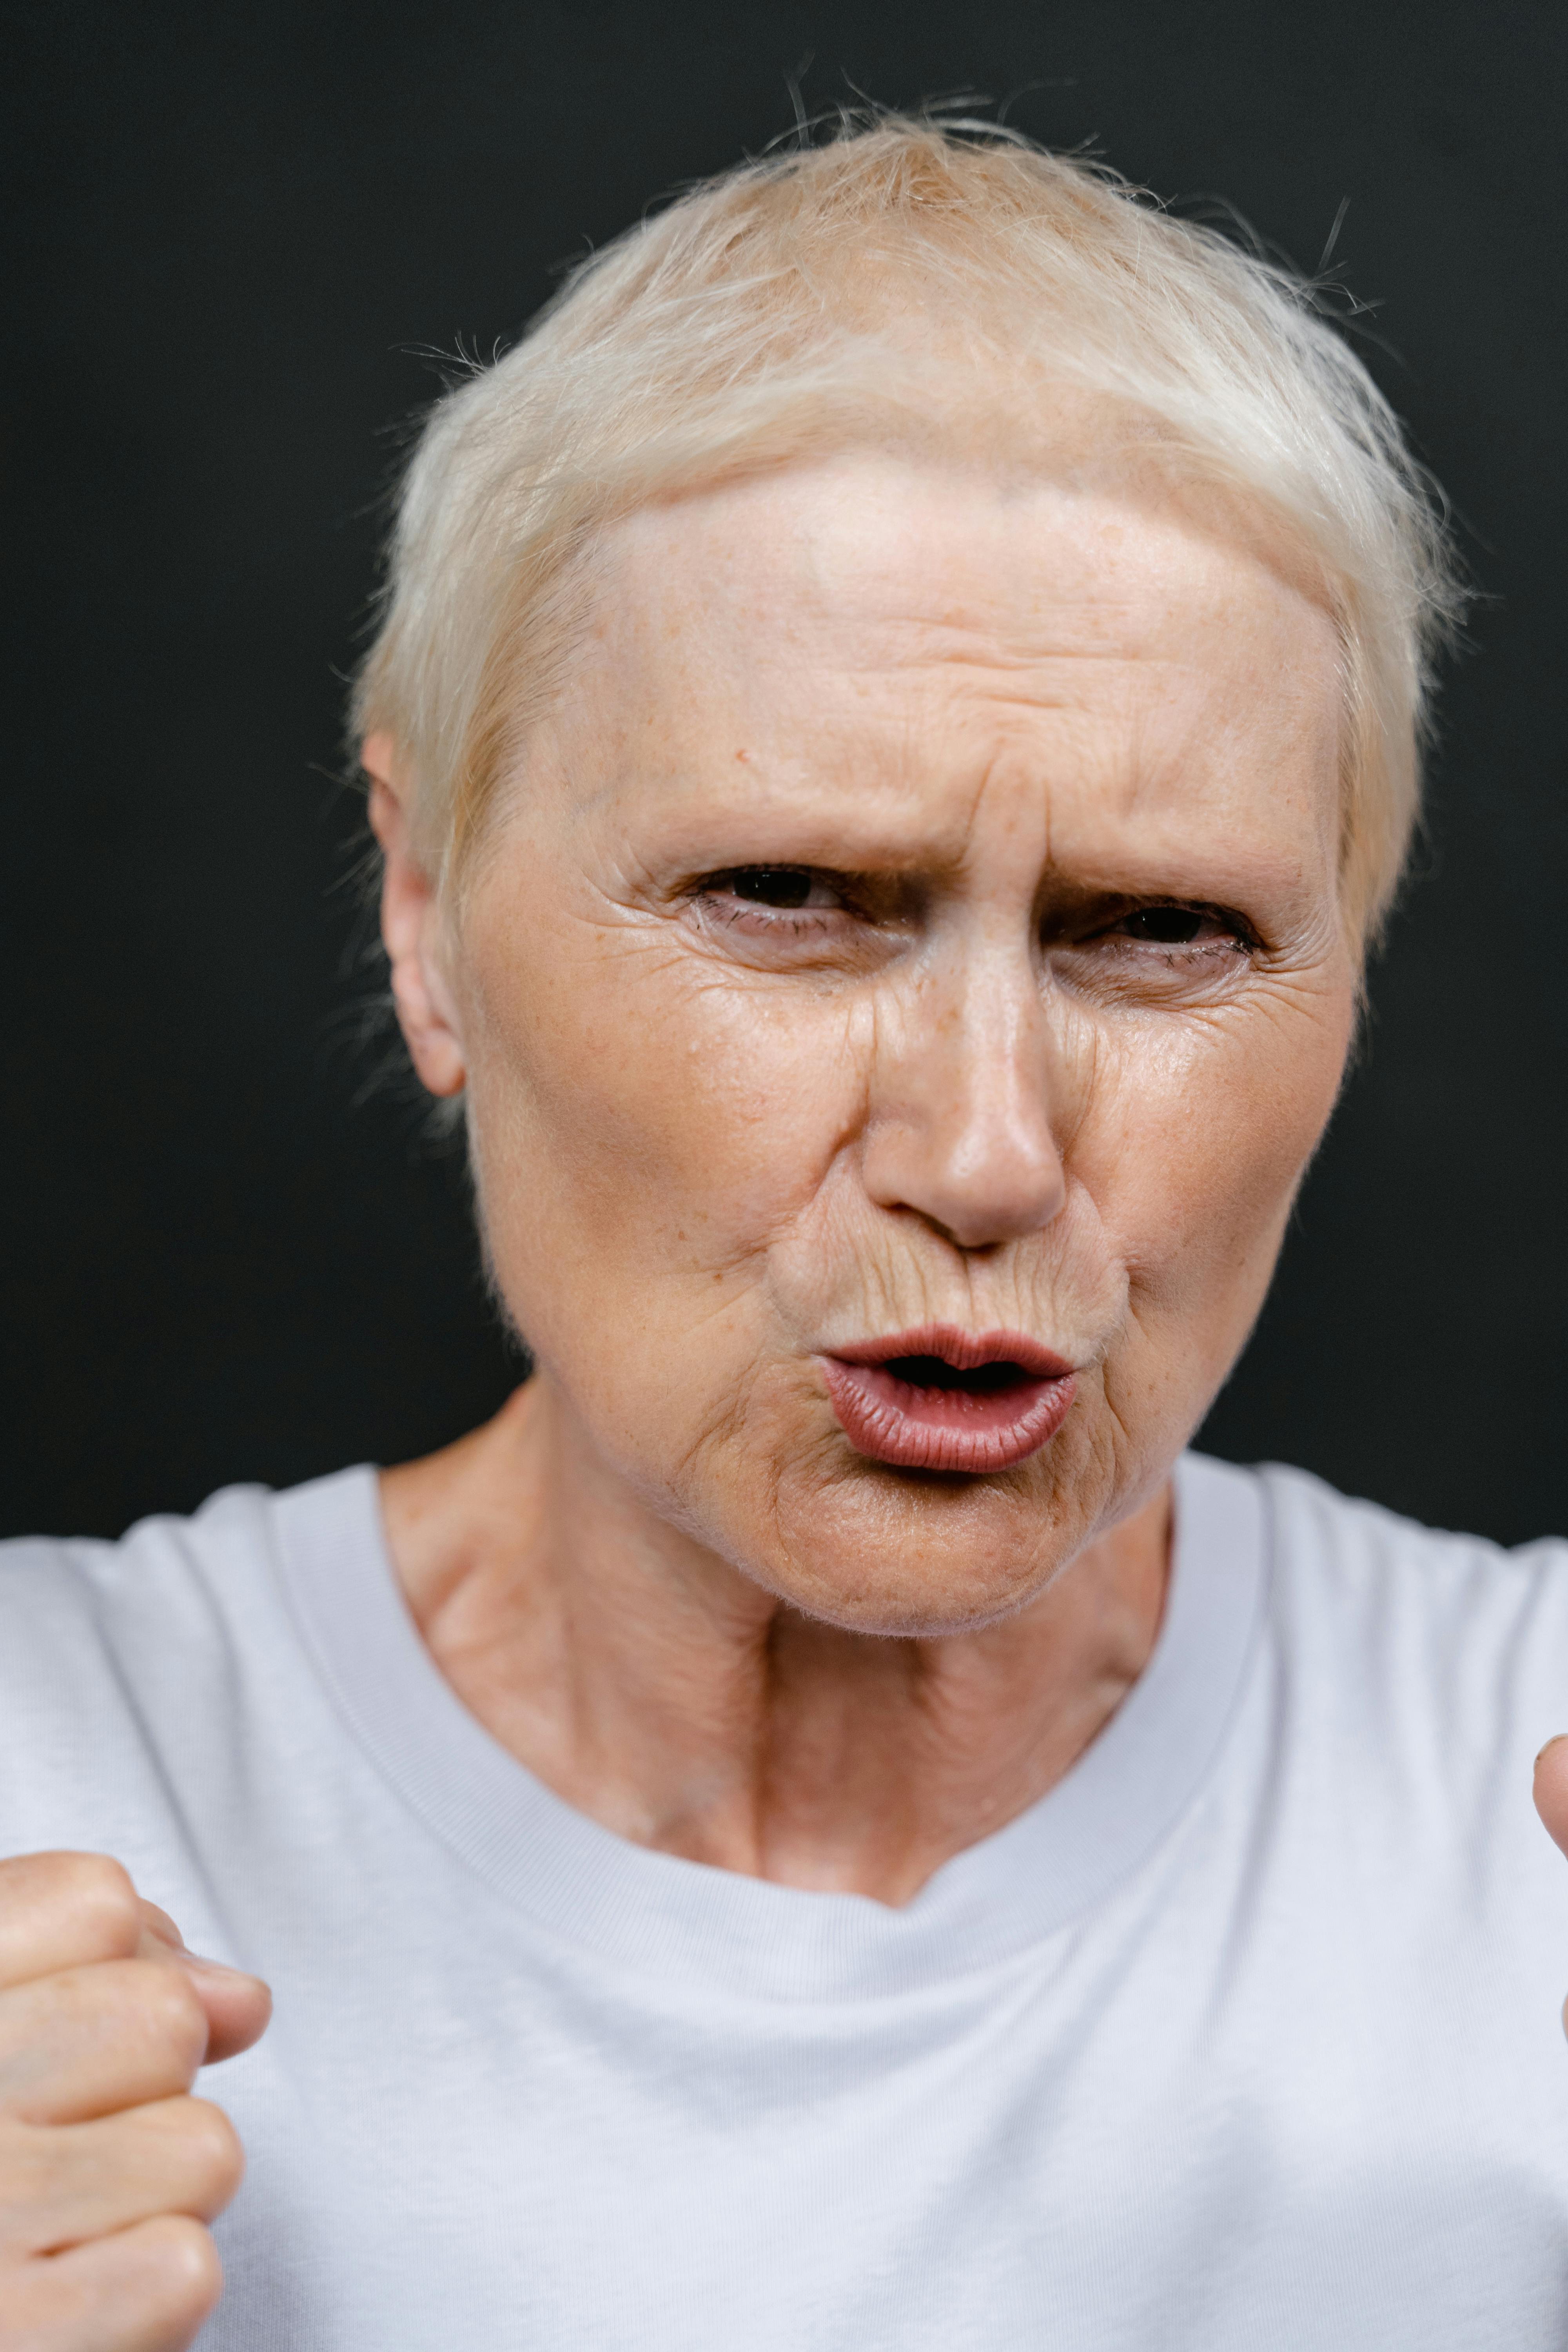 An upset older woman | Source: Pexels